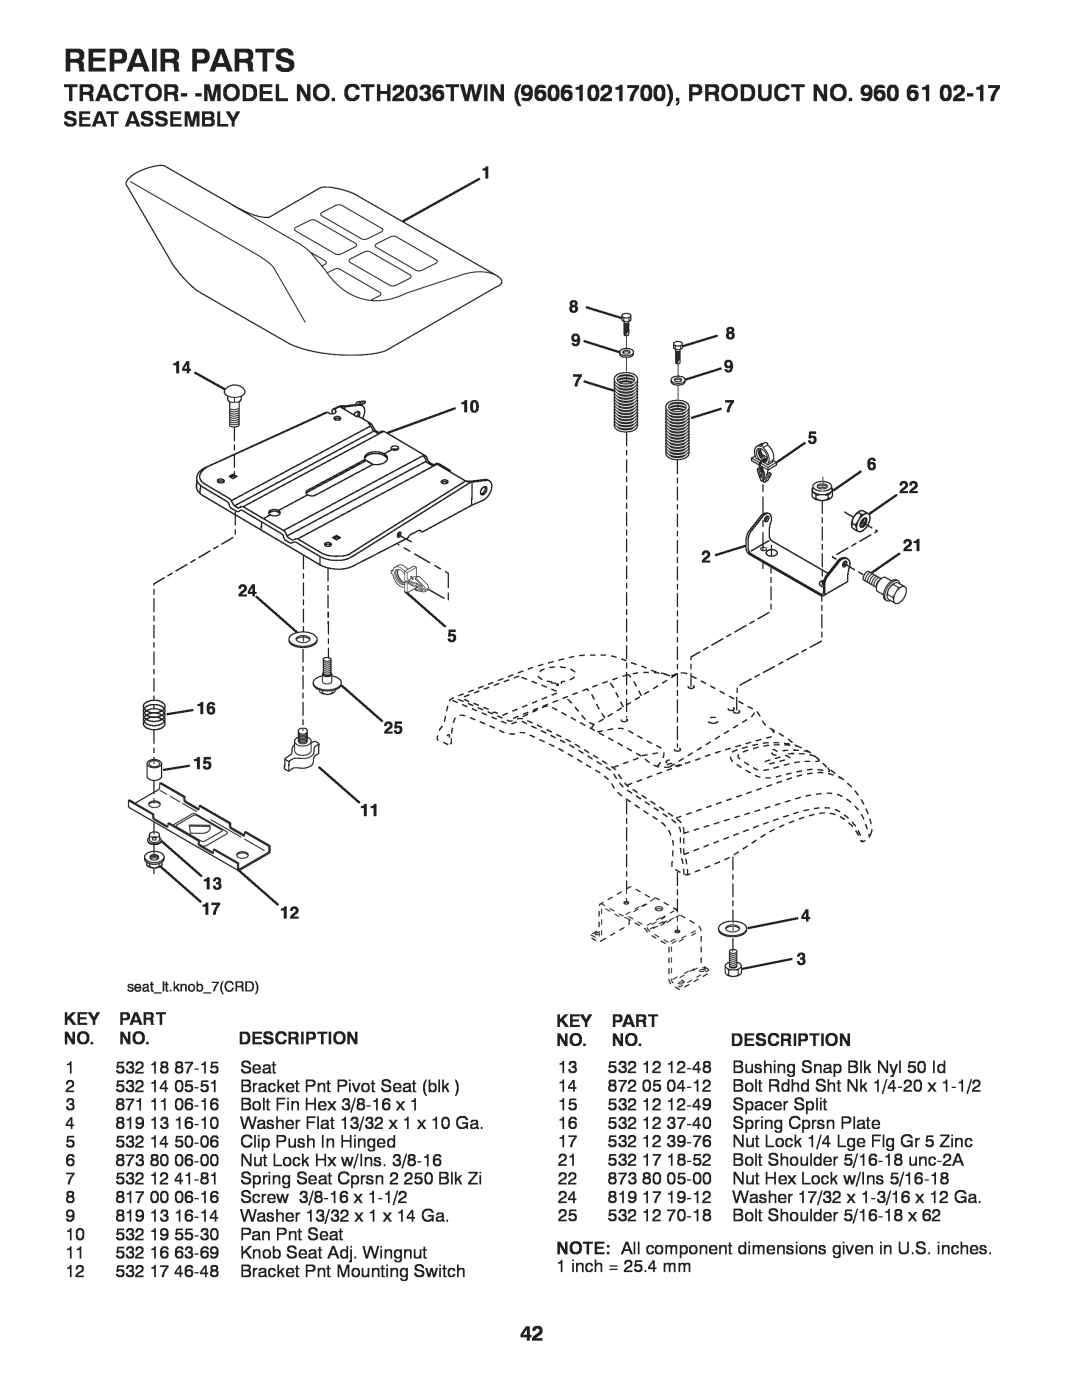 Husqvarna Seat Assembly, Repair Parts, TRACTOR- -MODEL NO. CTH2036TWIN 96061021700, PRODUCT NO. 960, seatlt.knob7CRD 